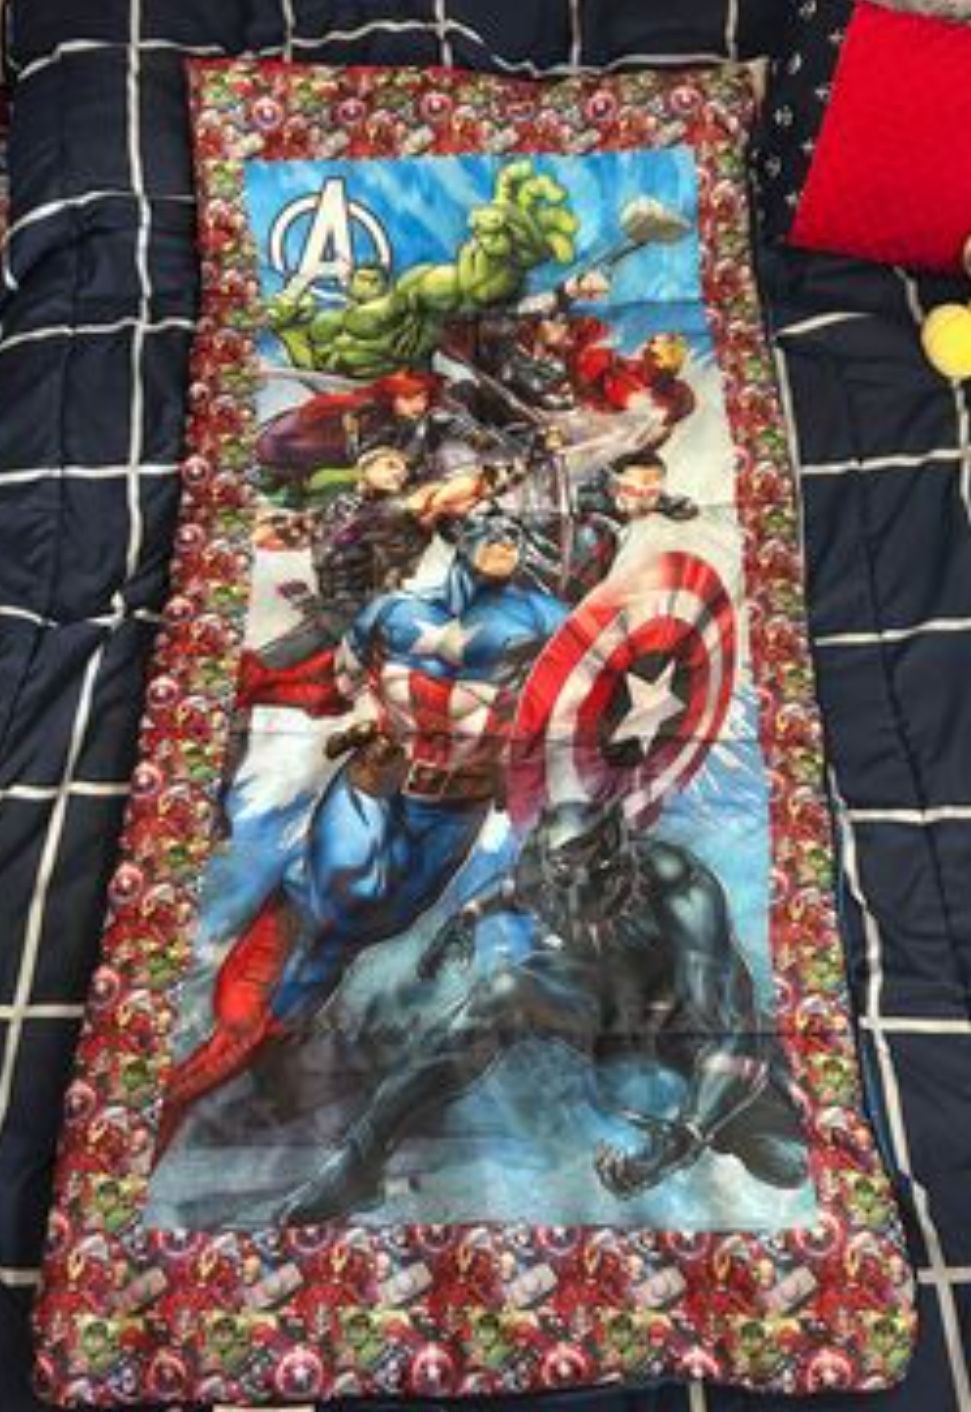 Avengers Sleeping Bag w/ Backpack 